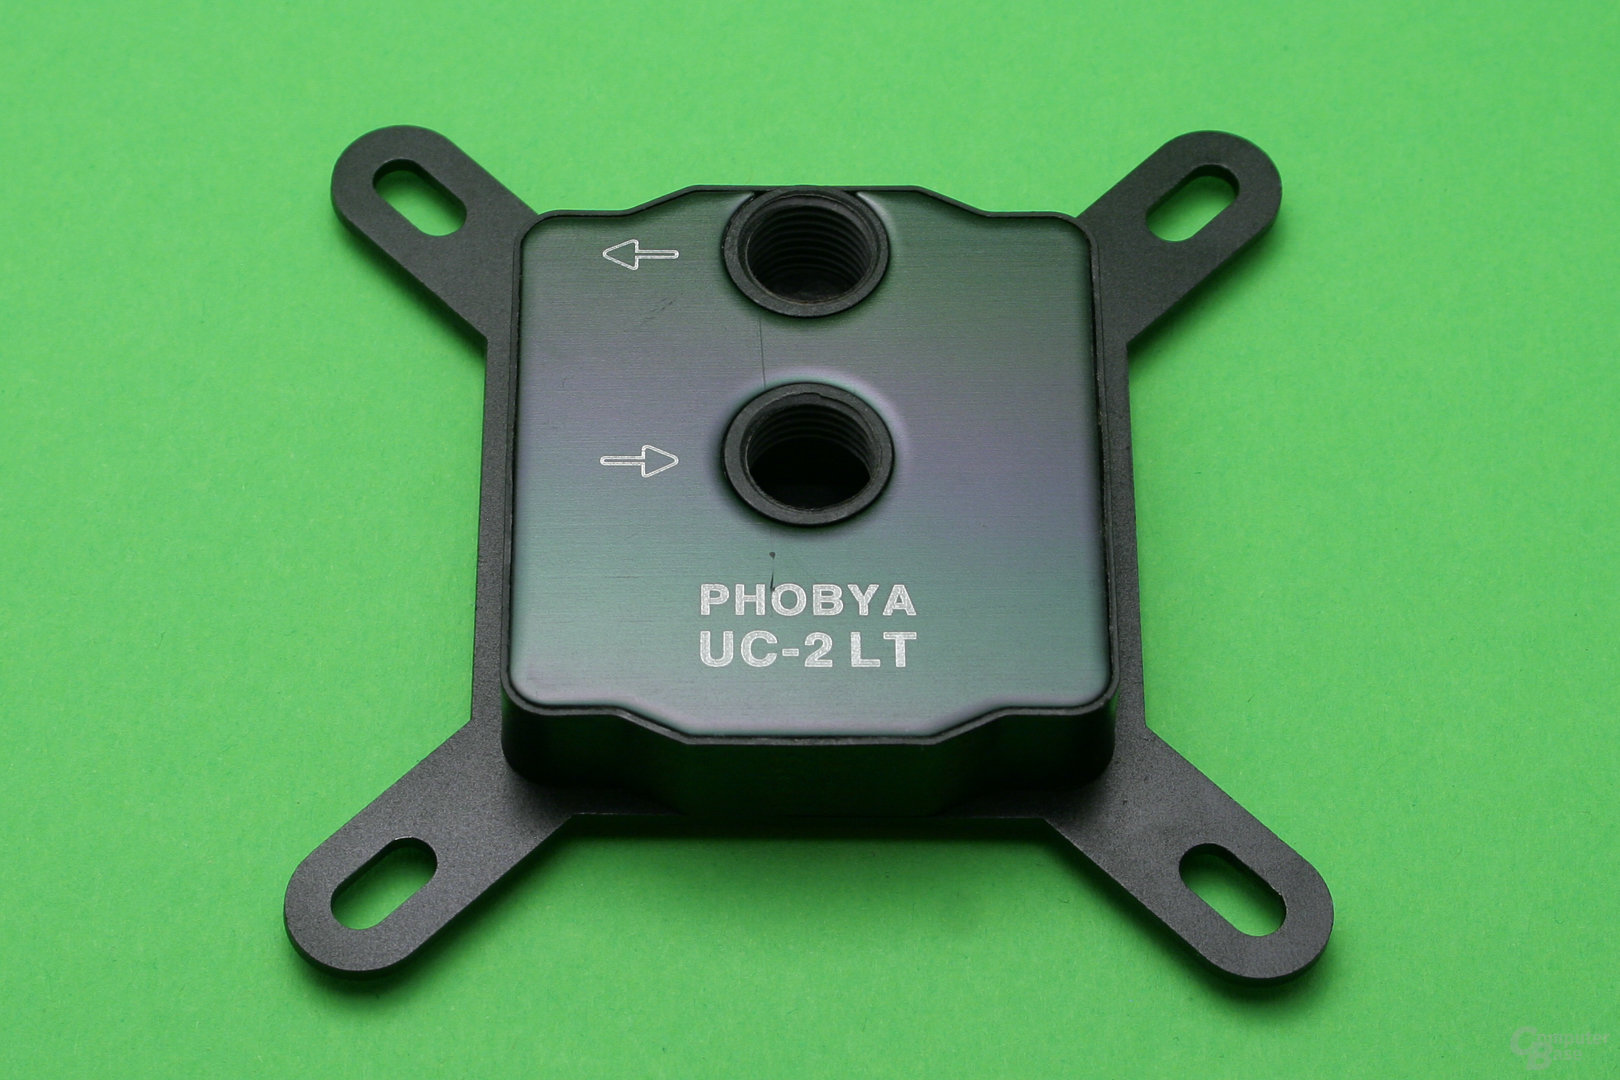 Phobya UC-2 LT